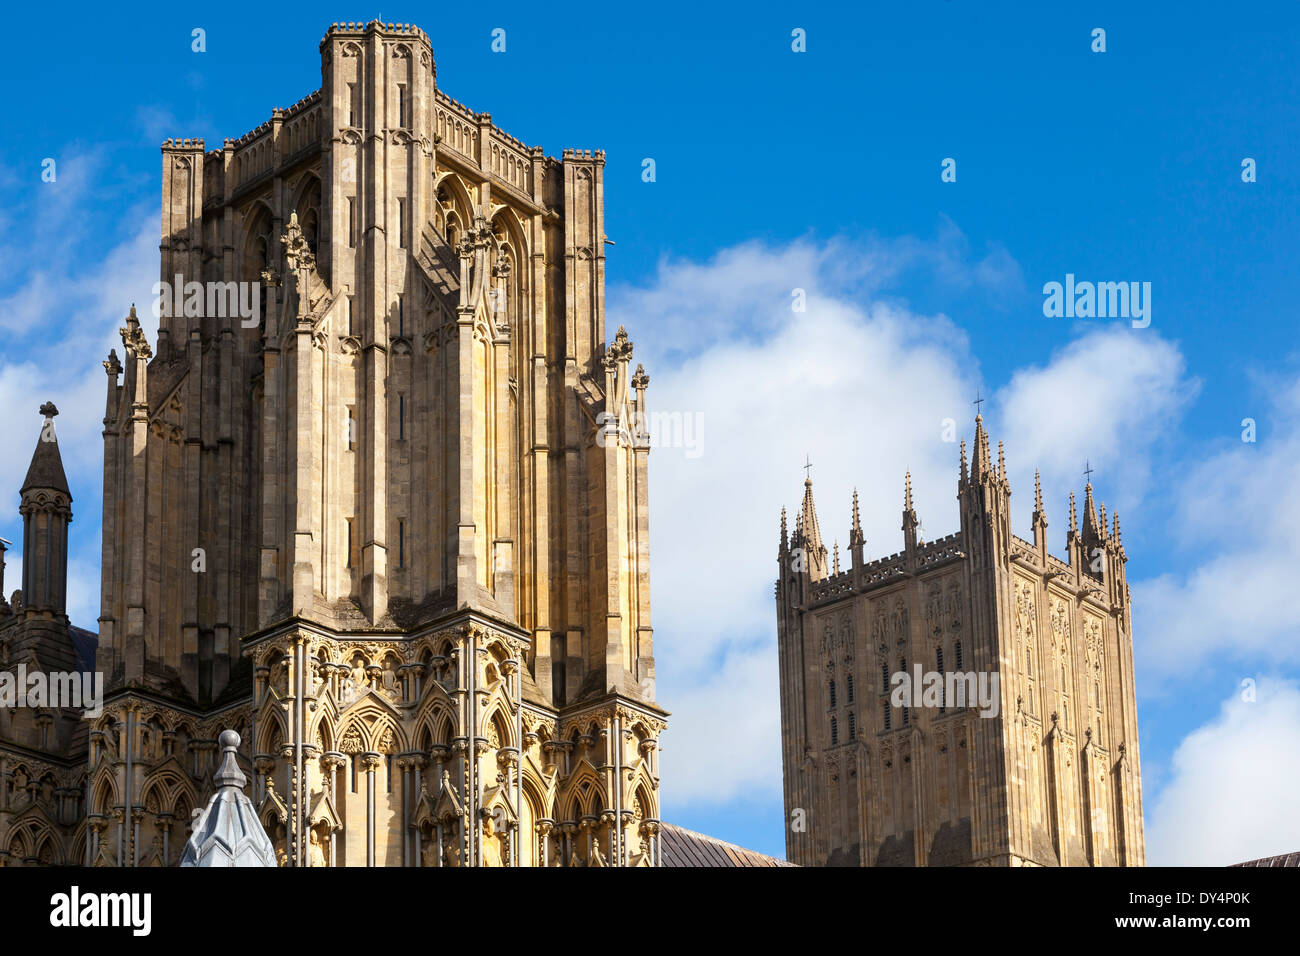 La cathédrale de Wells Somerset England UK Europe Banque D'Images